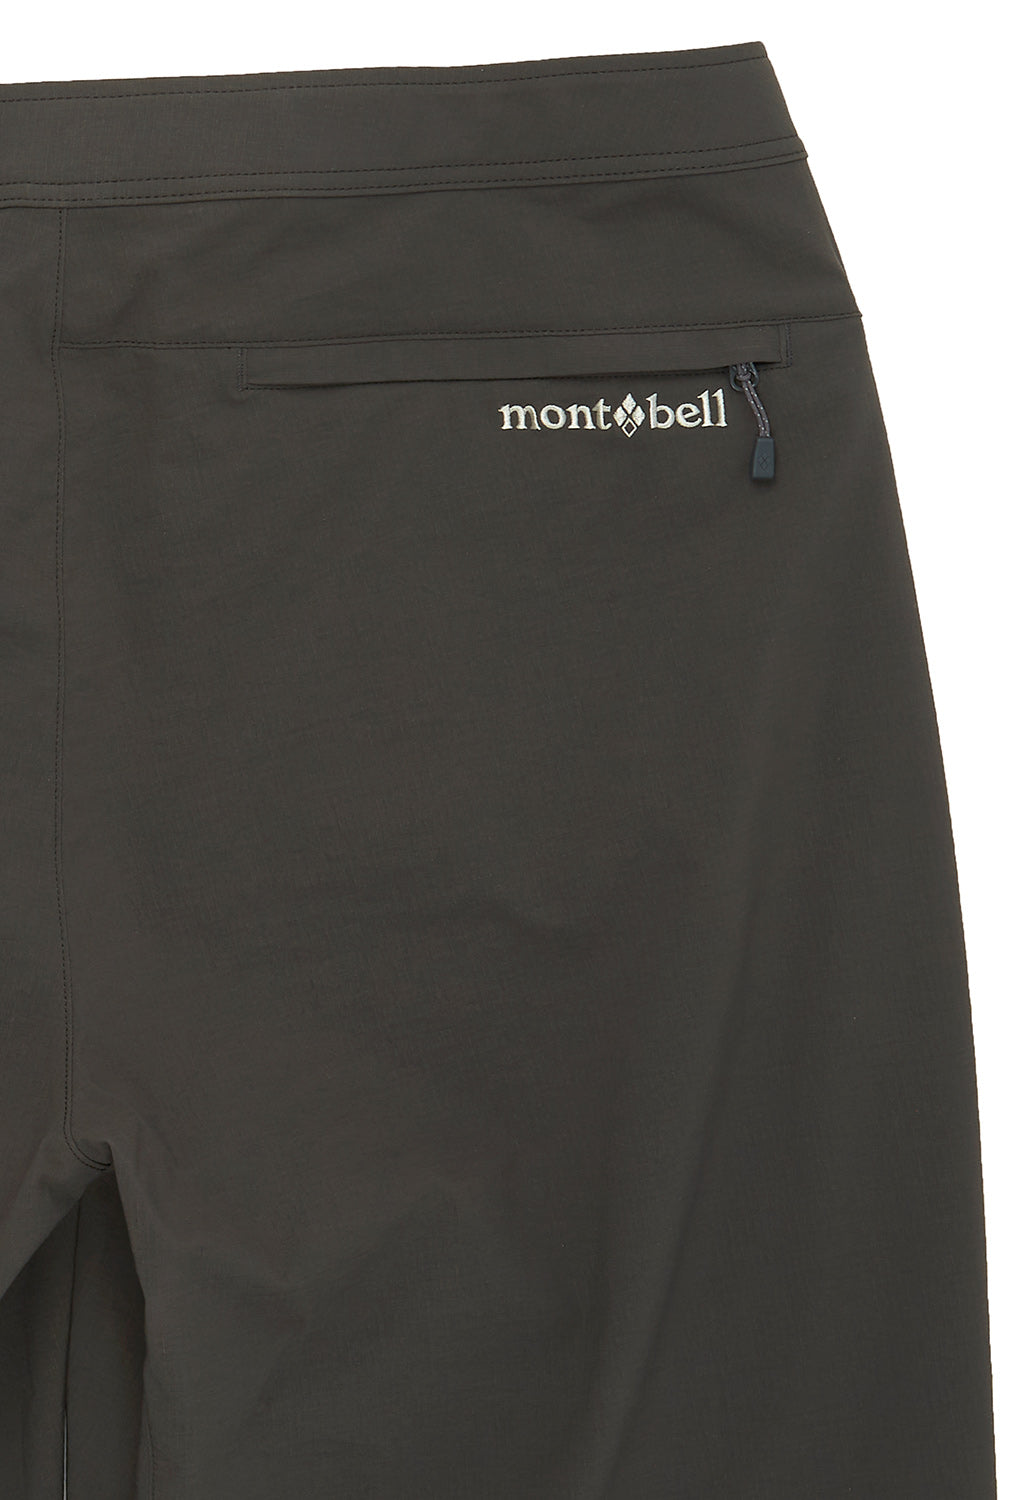 Montbell Men's Canyon Shorts - Dark Grey